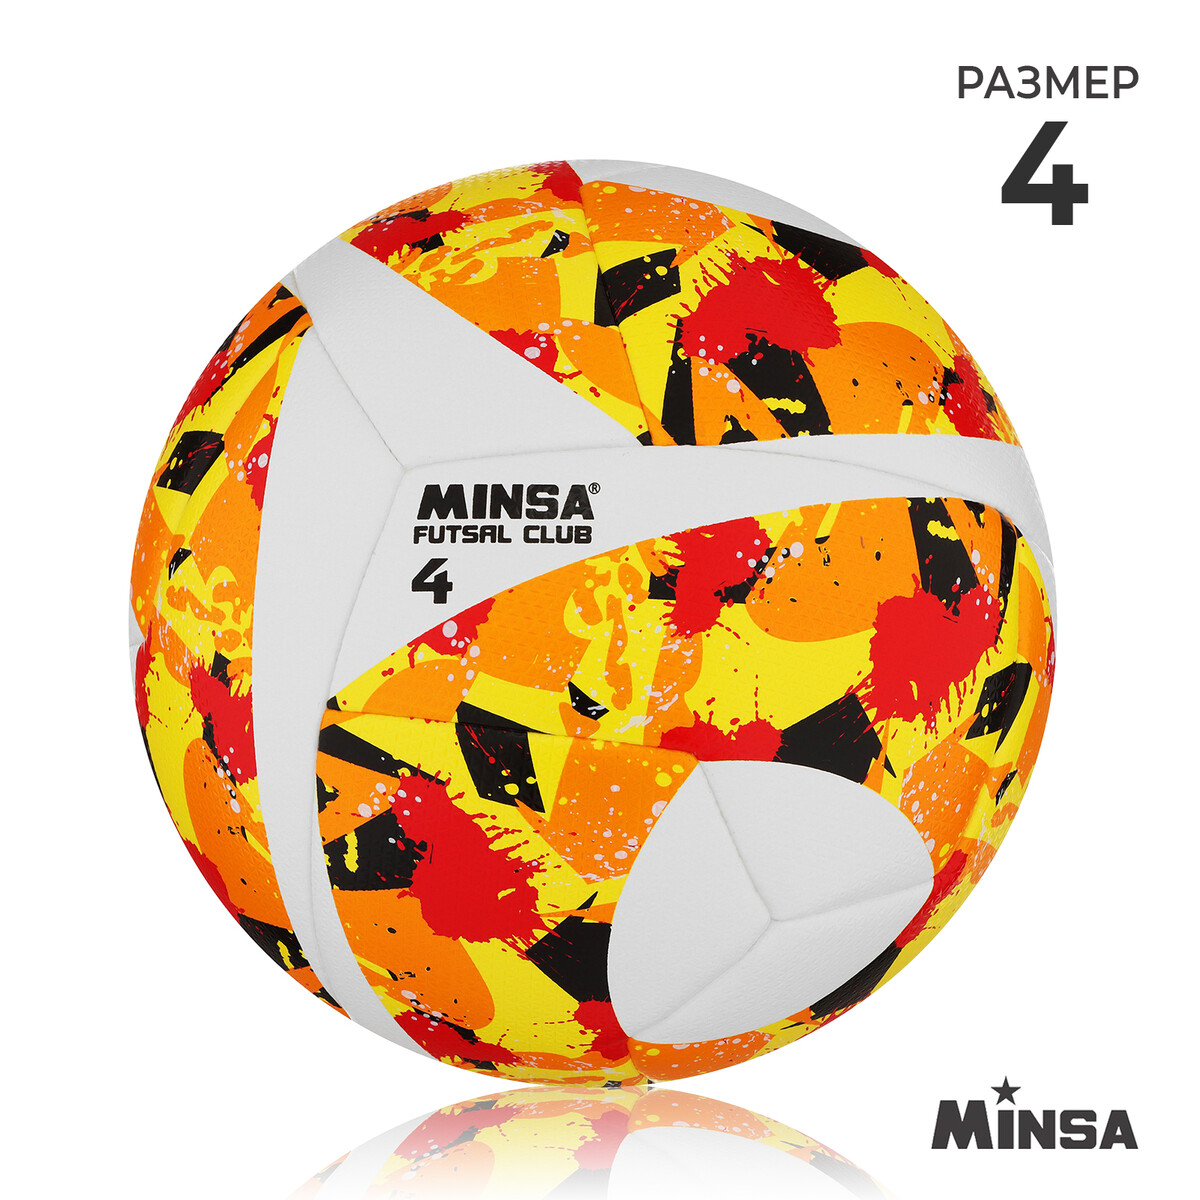 Мяч футбольный minsa futsal club, pu, гибридная сшивка, размер 4 мяч футзальный torres futsal striker fs321014 р 4